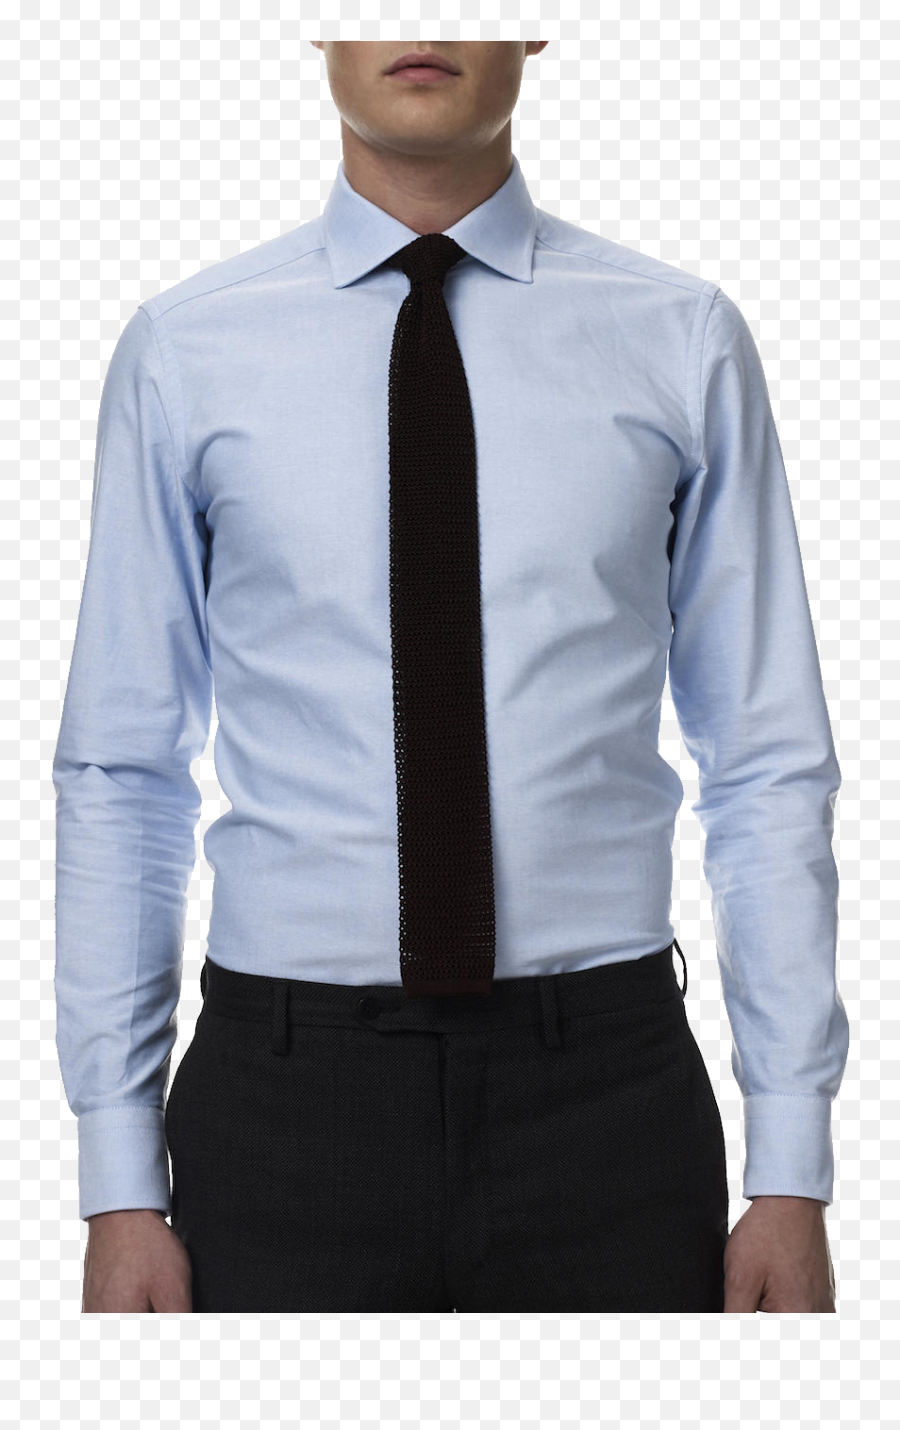 Download Llight Blue Dress Shirt Black Tie Png Image For Free - Blue Shirt Black Tie,Dresses Png